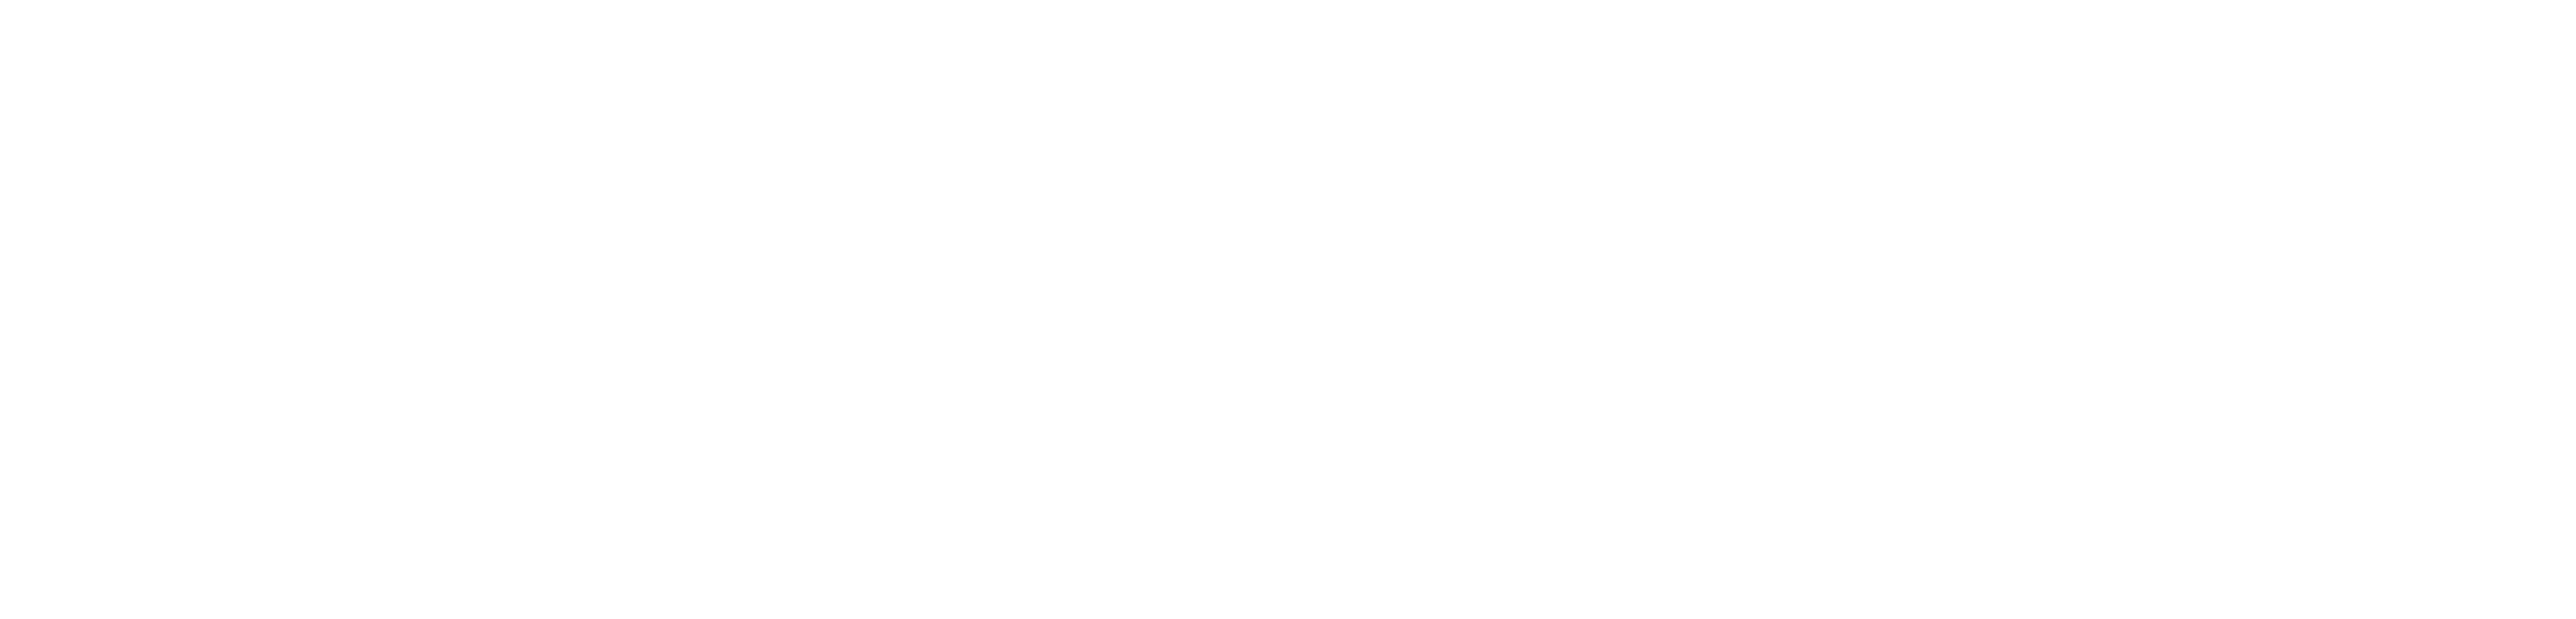 Deepbridge logo